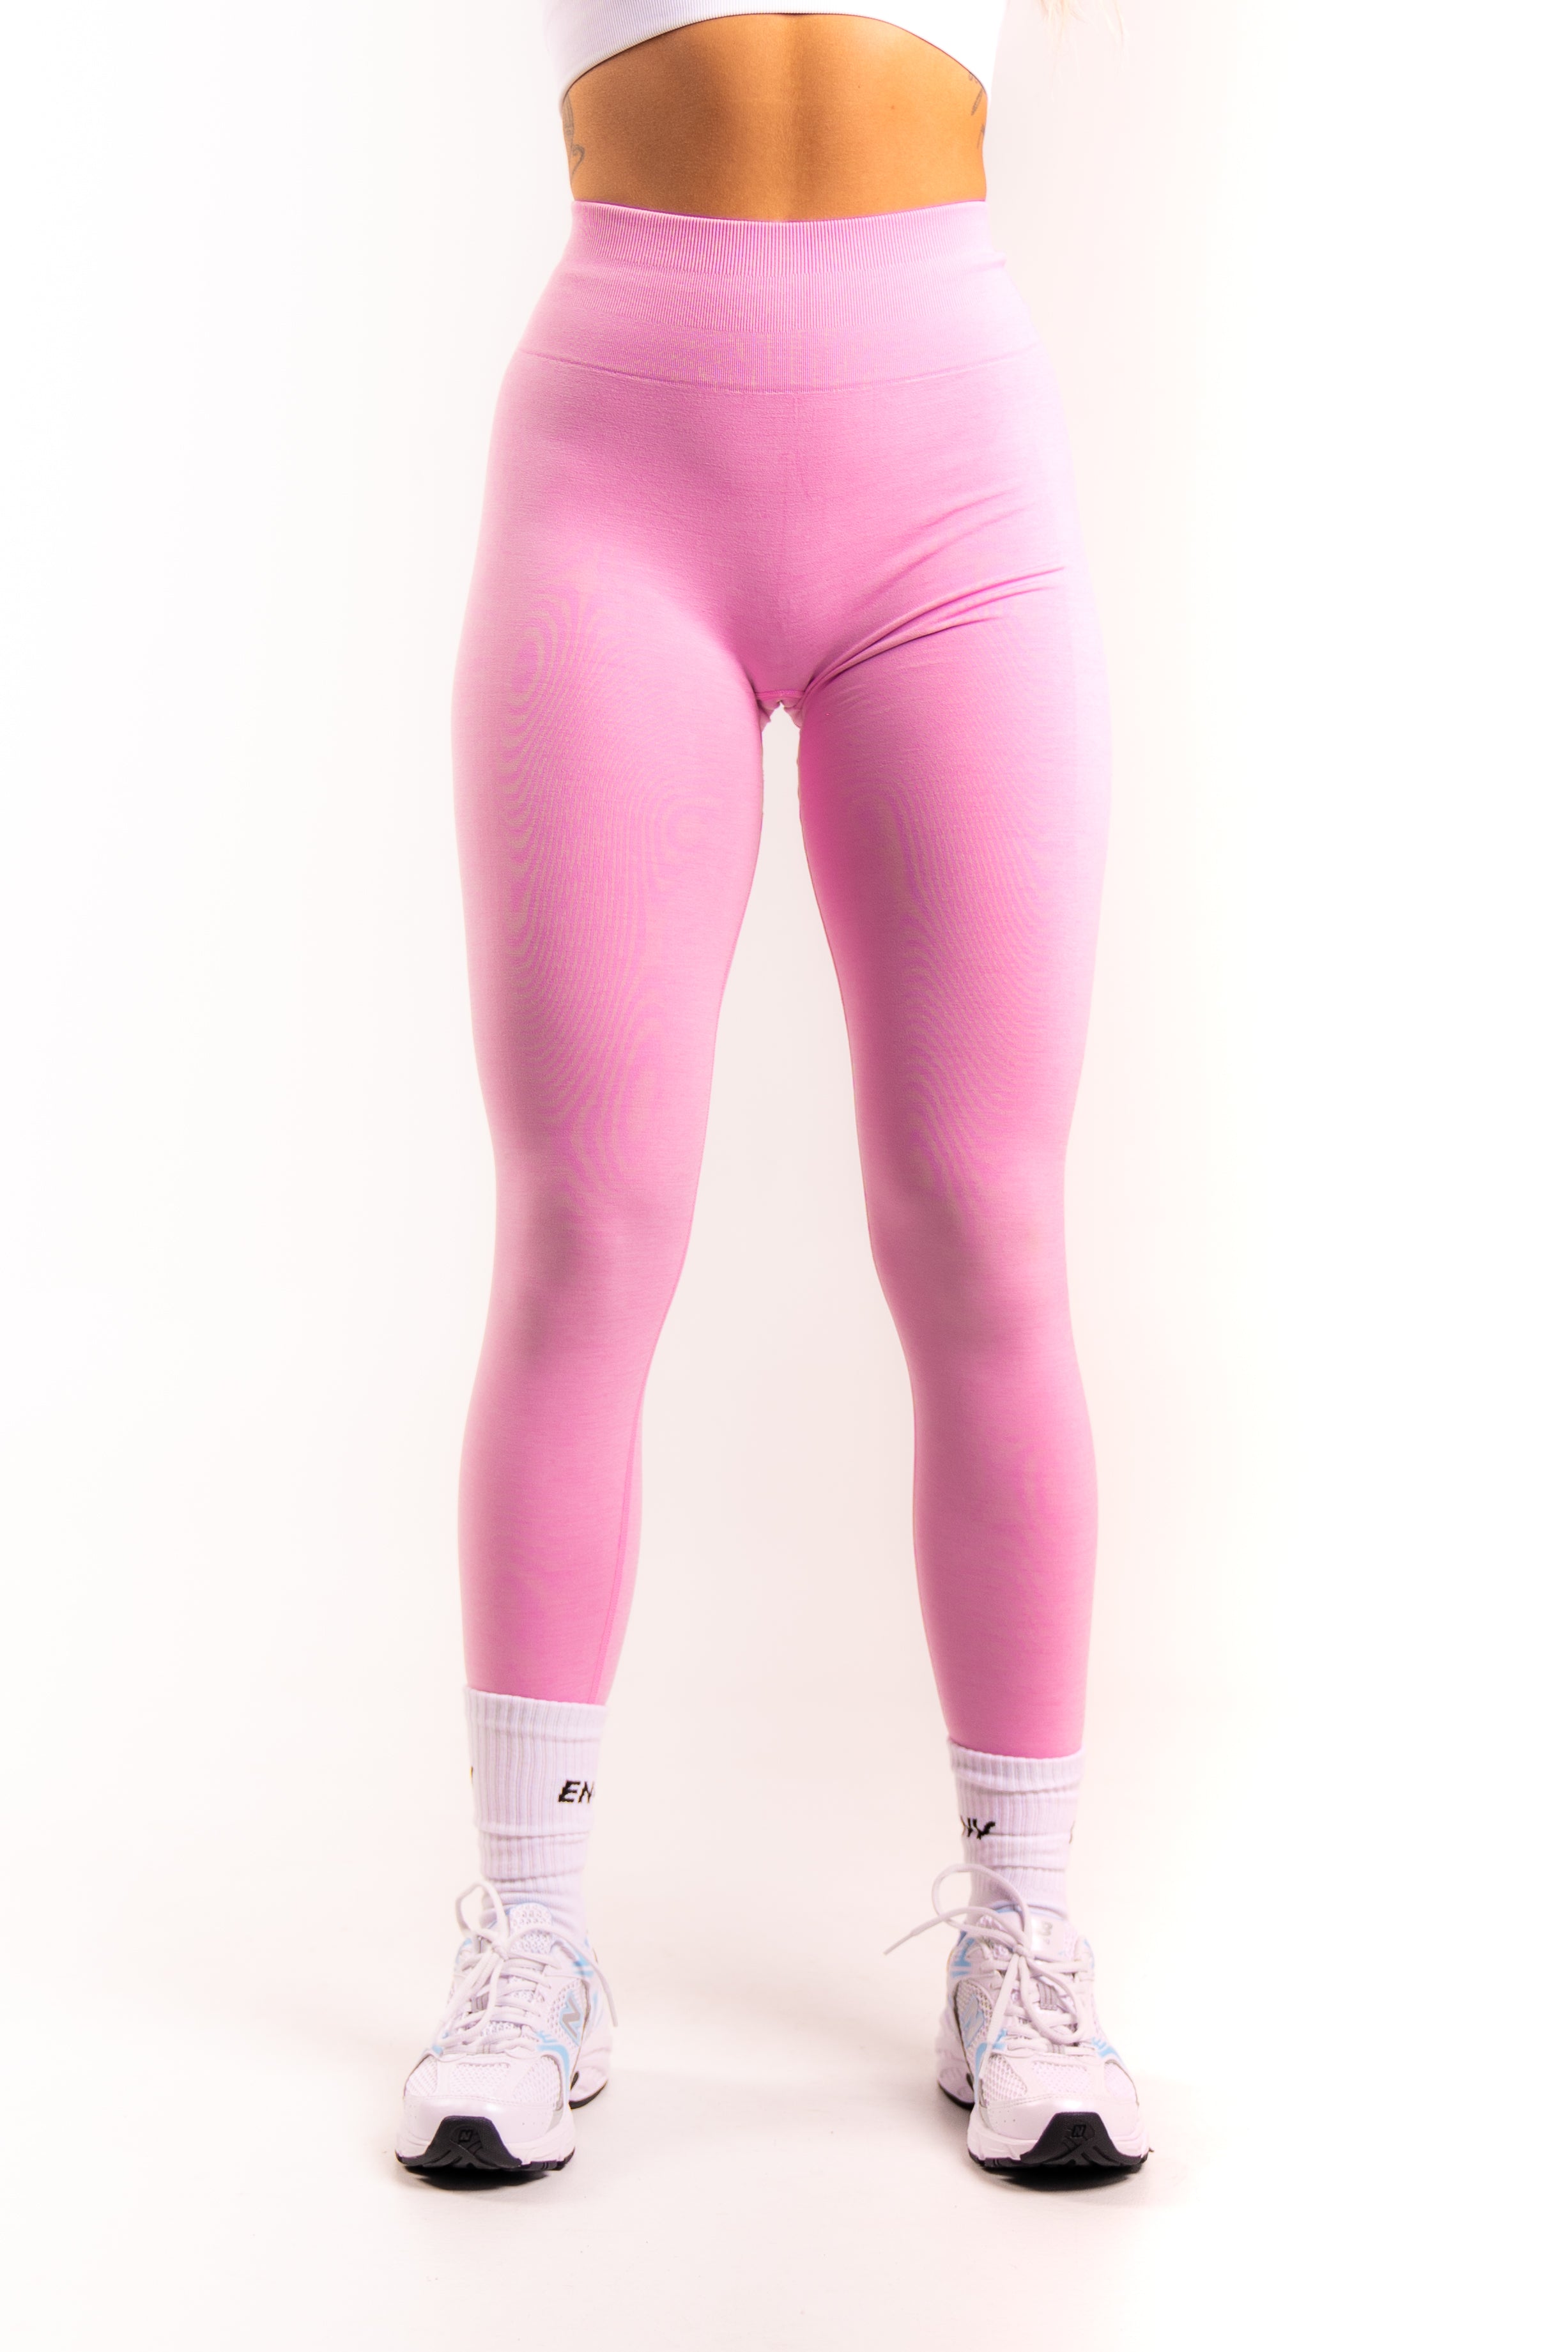 ATLANS CLOTHS Pink and Grey Churidar Leggings for Active Women Ankle Length  Length Slim Fit Stretchable Cotton Elastane Pink Grey Leggings for Women